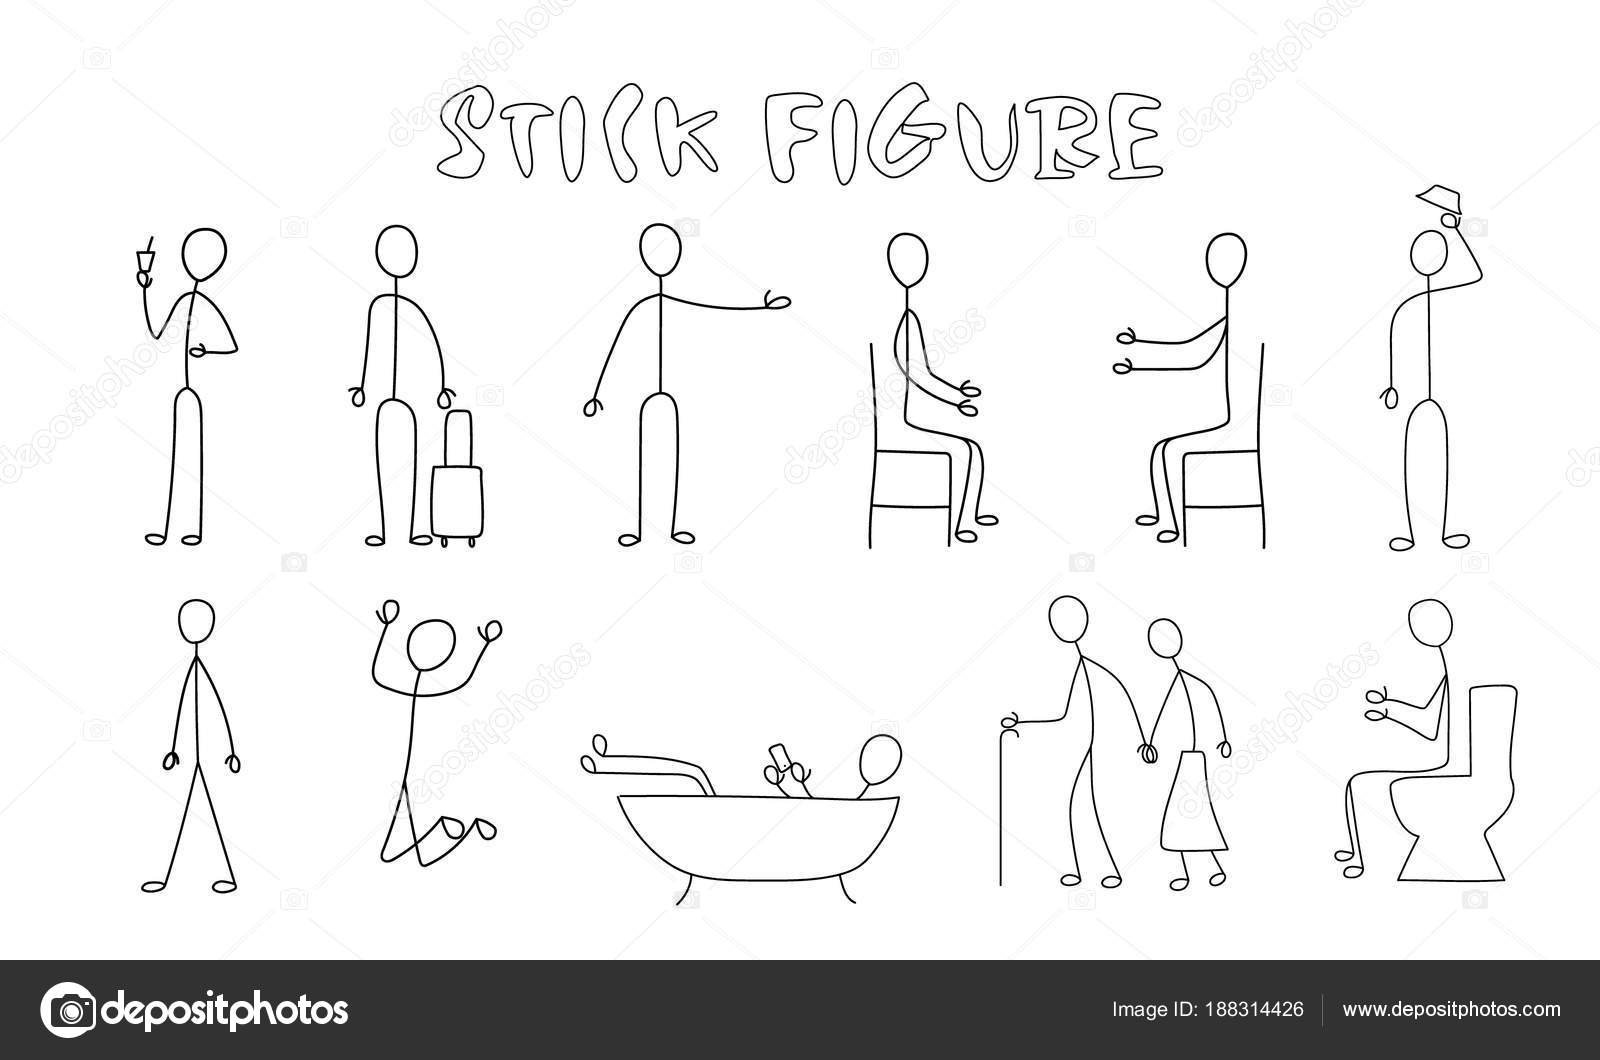 stick action figures